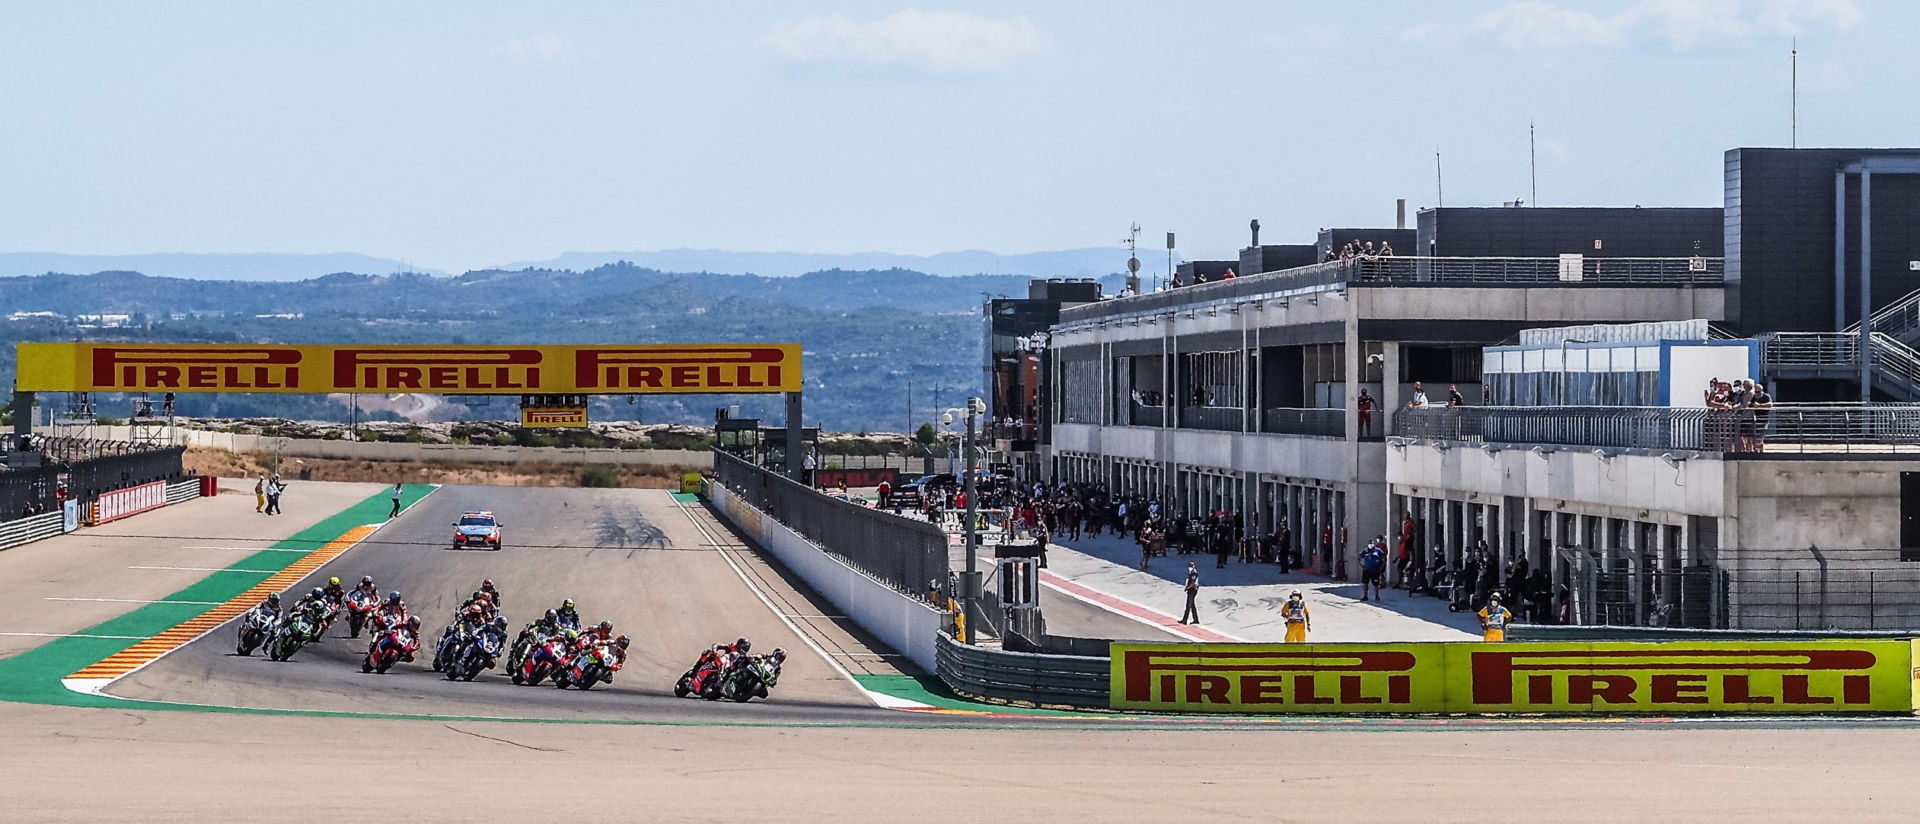 The start of a World Superbike race at Motorland Aragon in 2020. Photo courtesy Dorna.